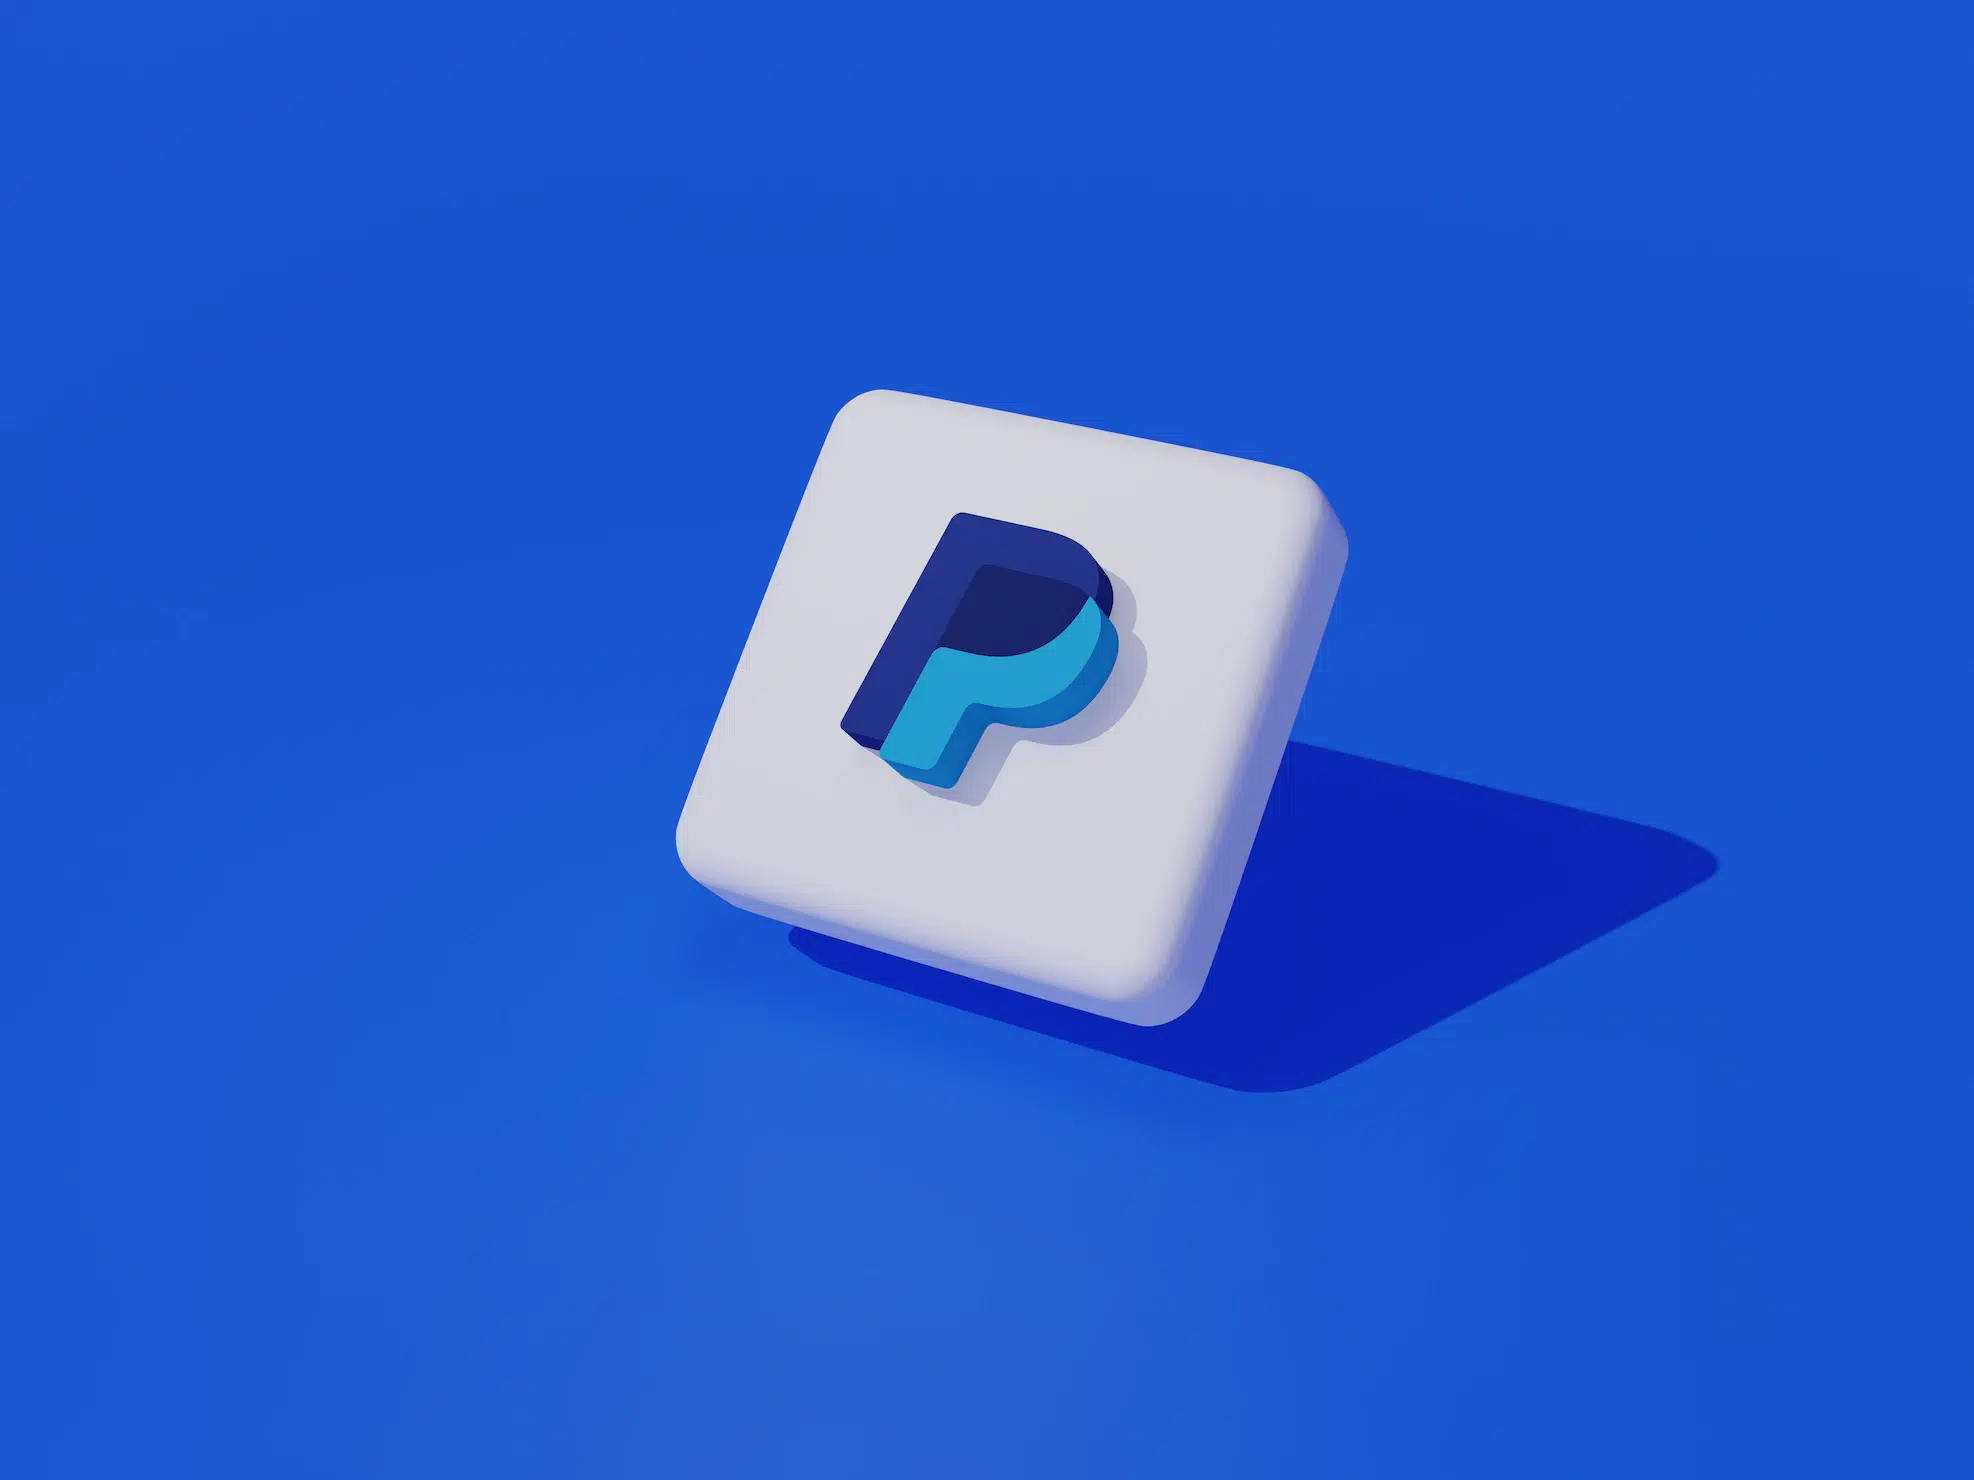 PayPal Button